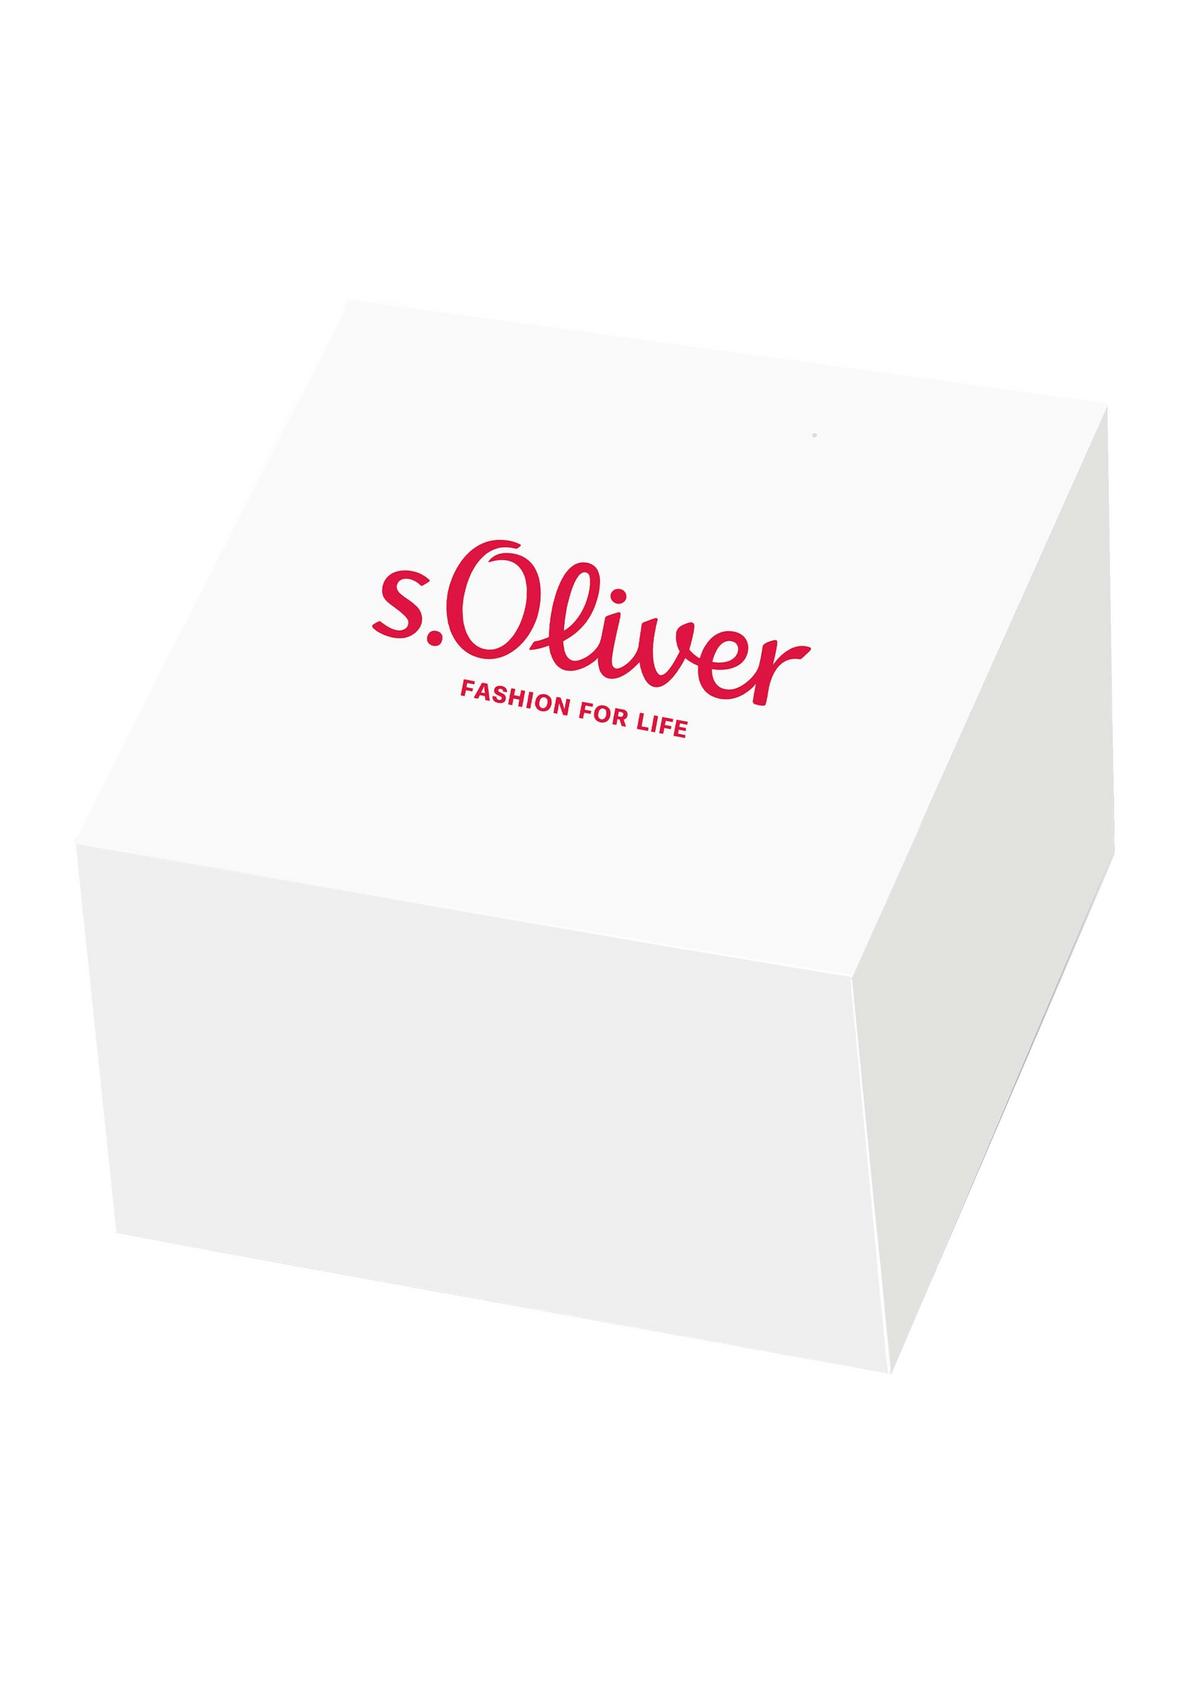 s.Oliver Blaue Armbanduhr mit Glitzer-Kunstlederband